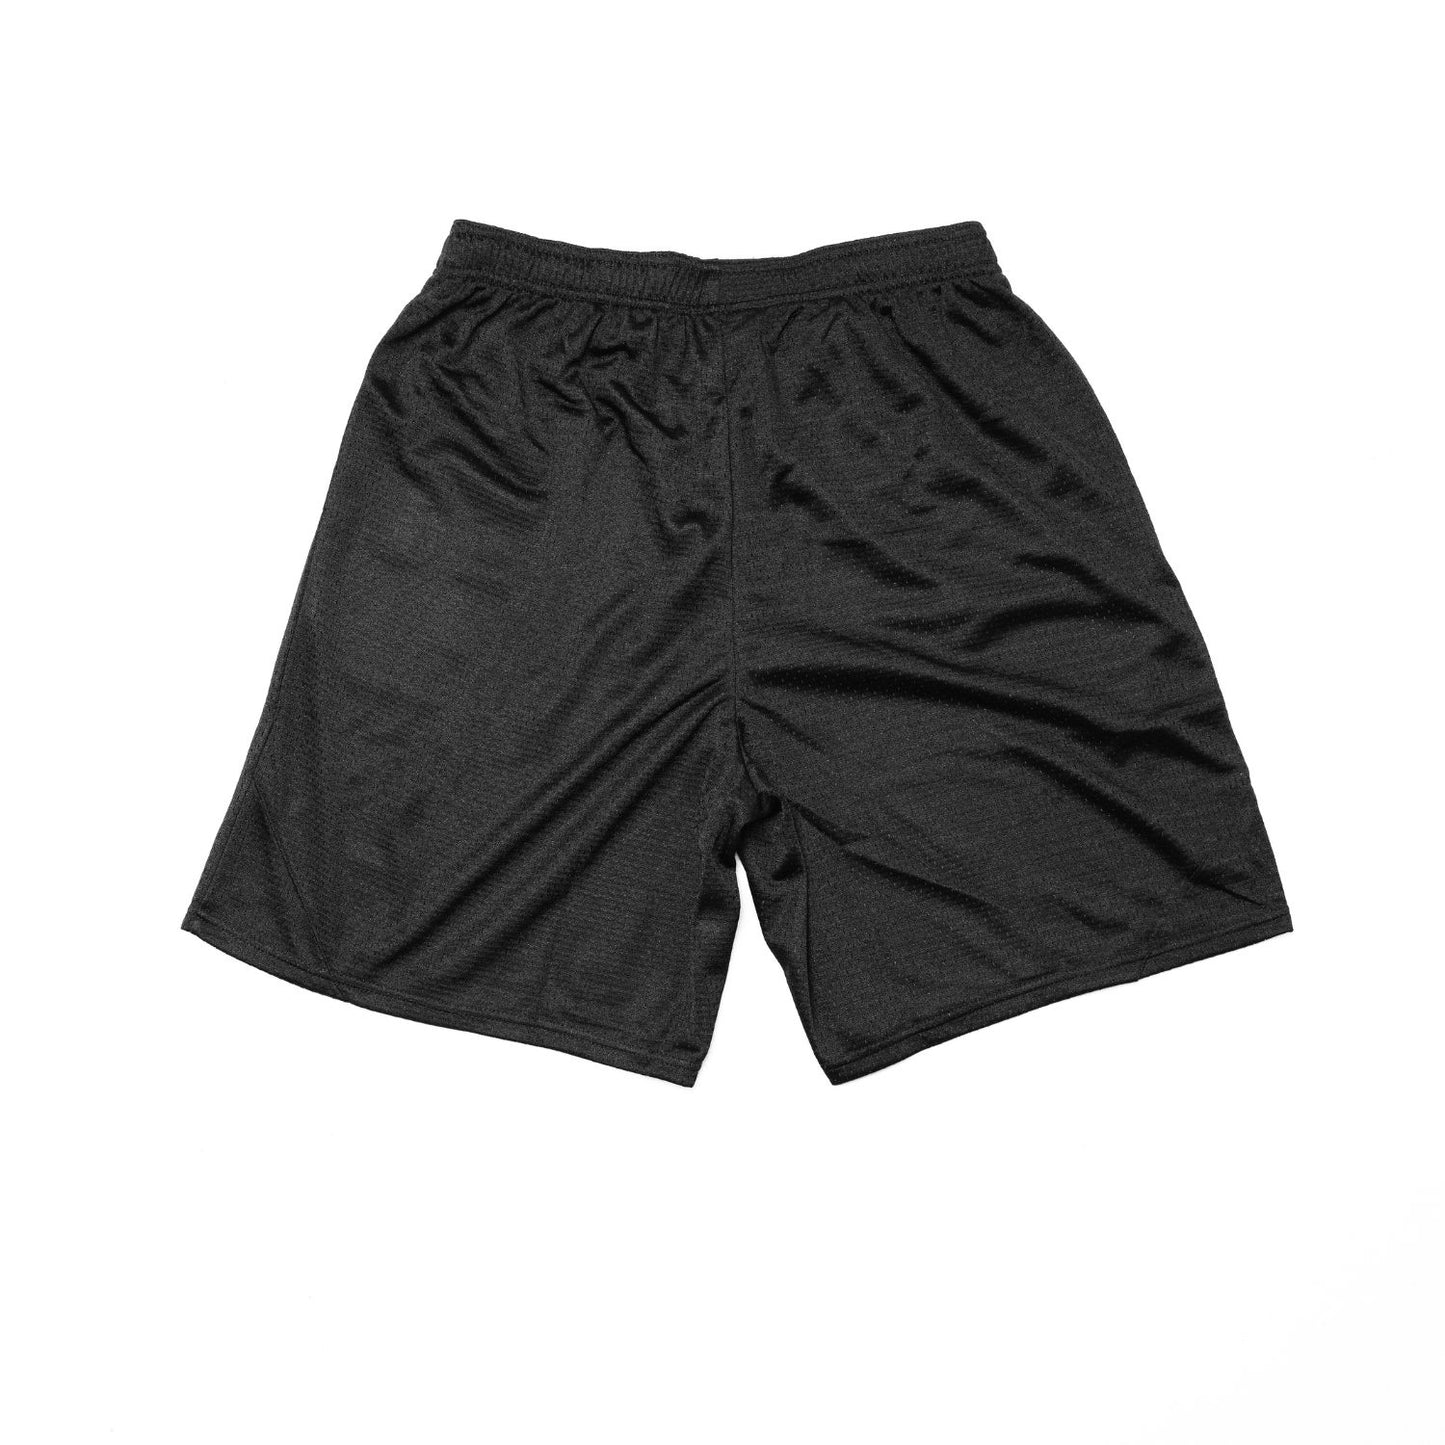 TAR Basketball Shorts - Vintage NBA Style - Breathable Mesh